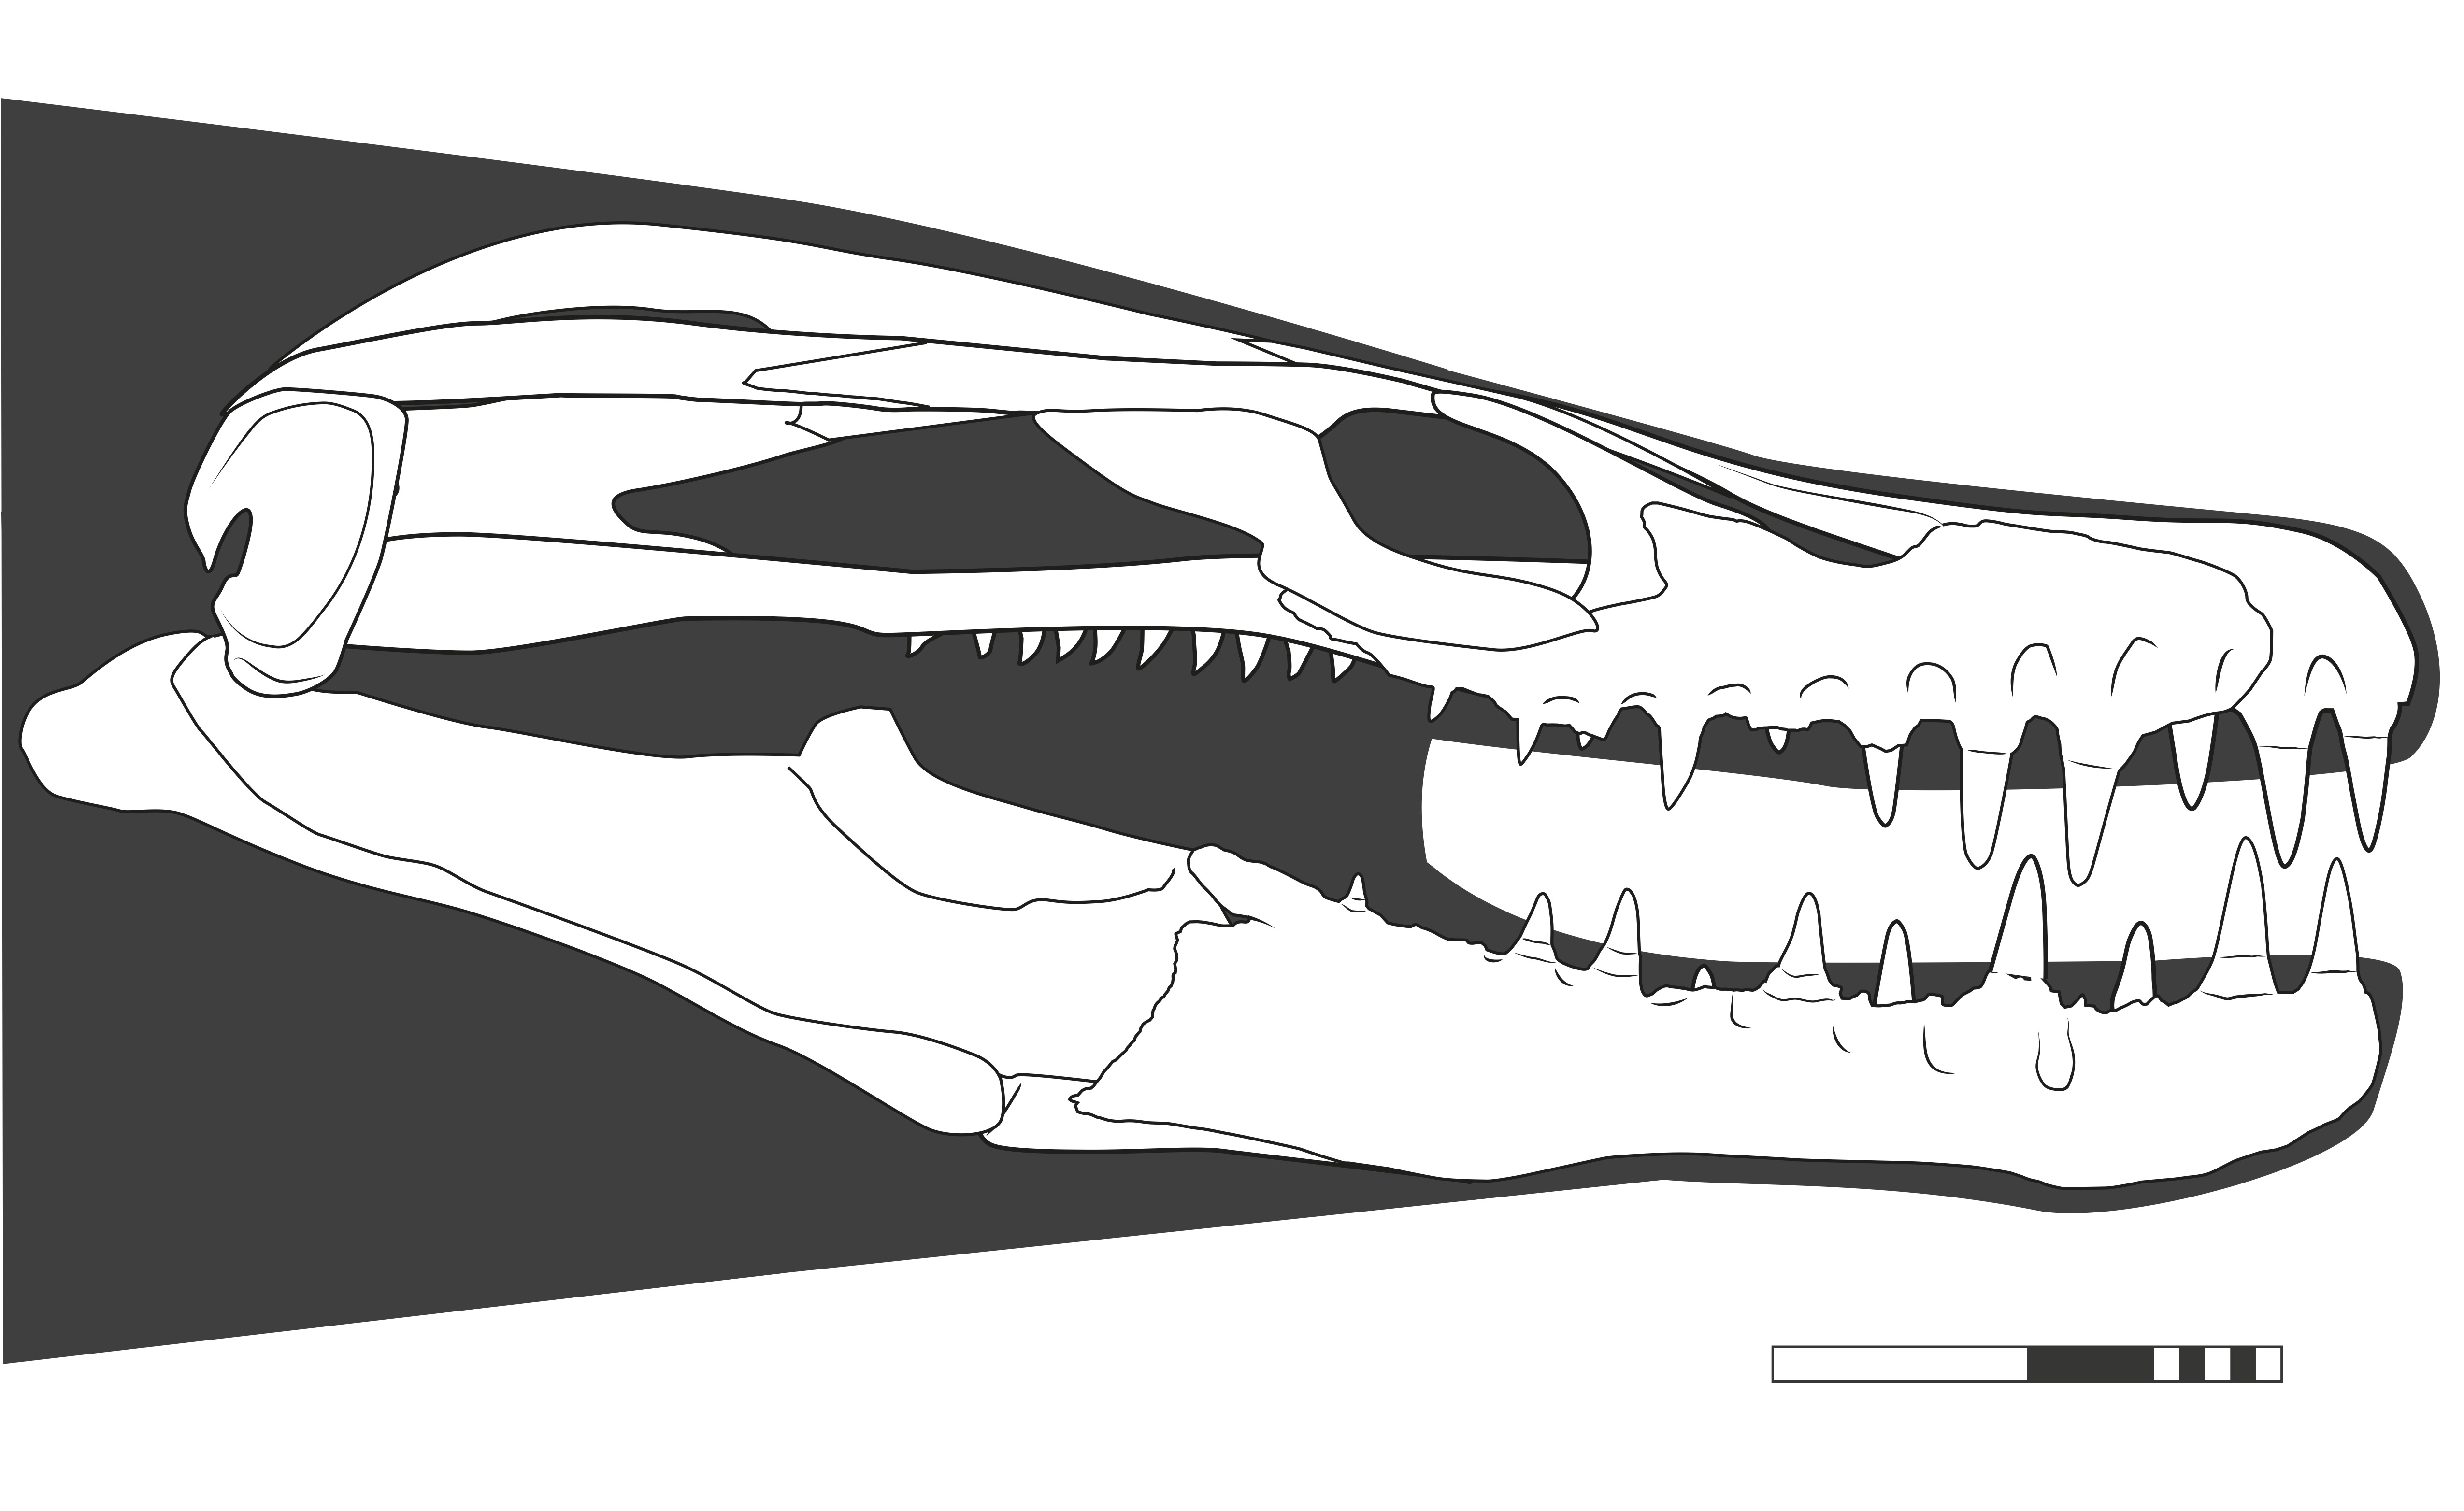 A reconstruction of the elongated Khinjaria acuta skull